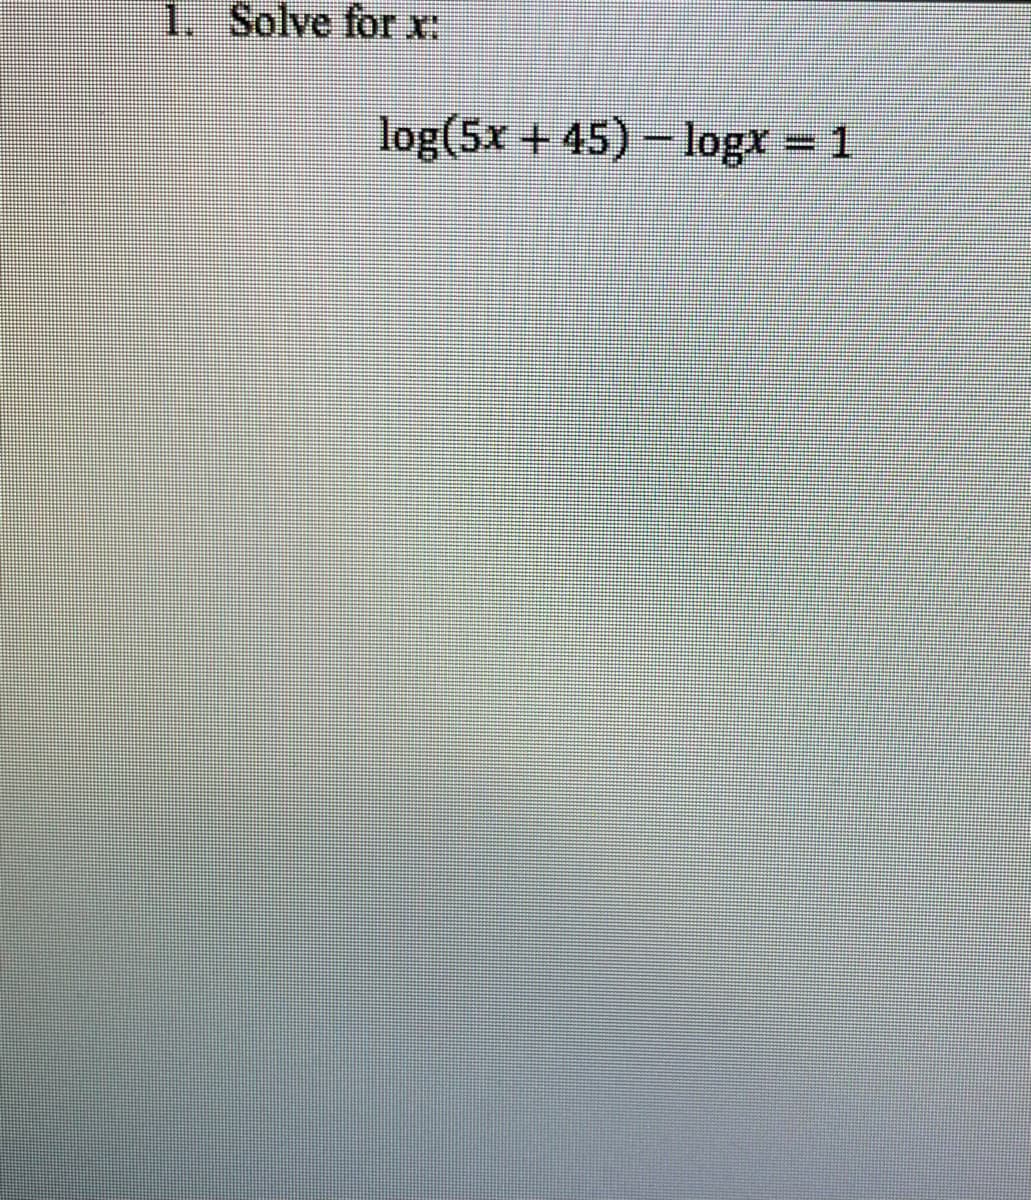 1. Solve for X:
log(5x + 45) - logx 1
